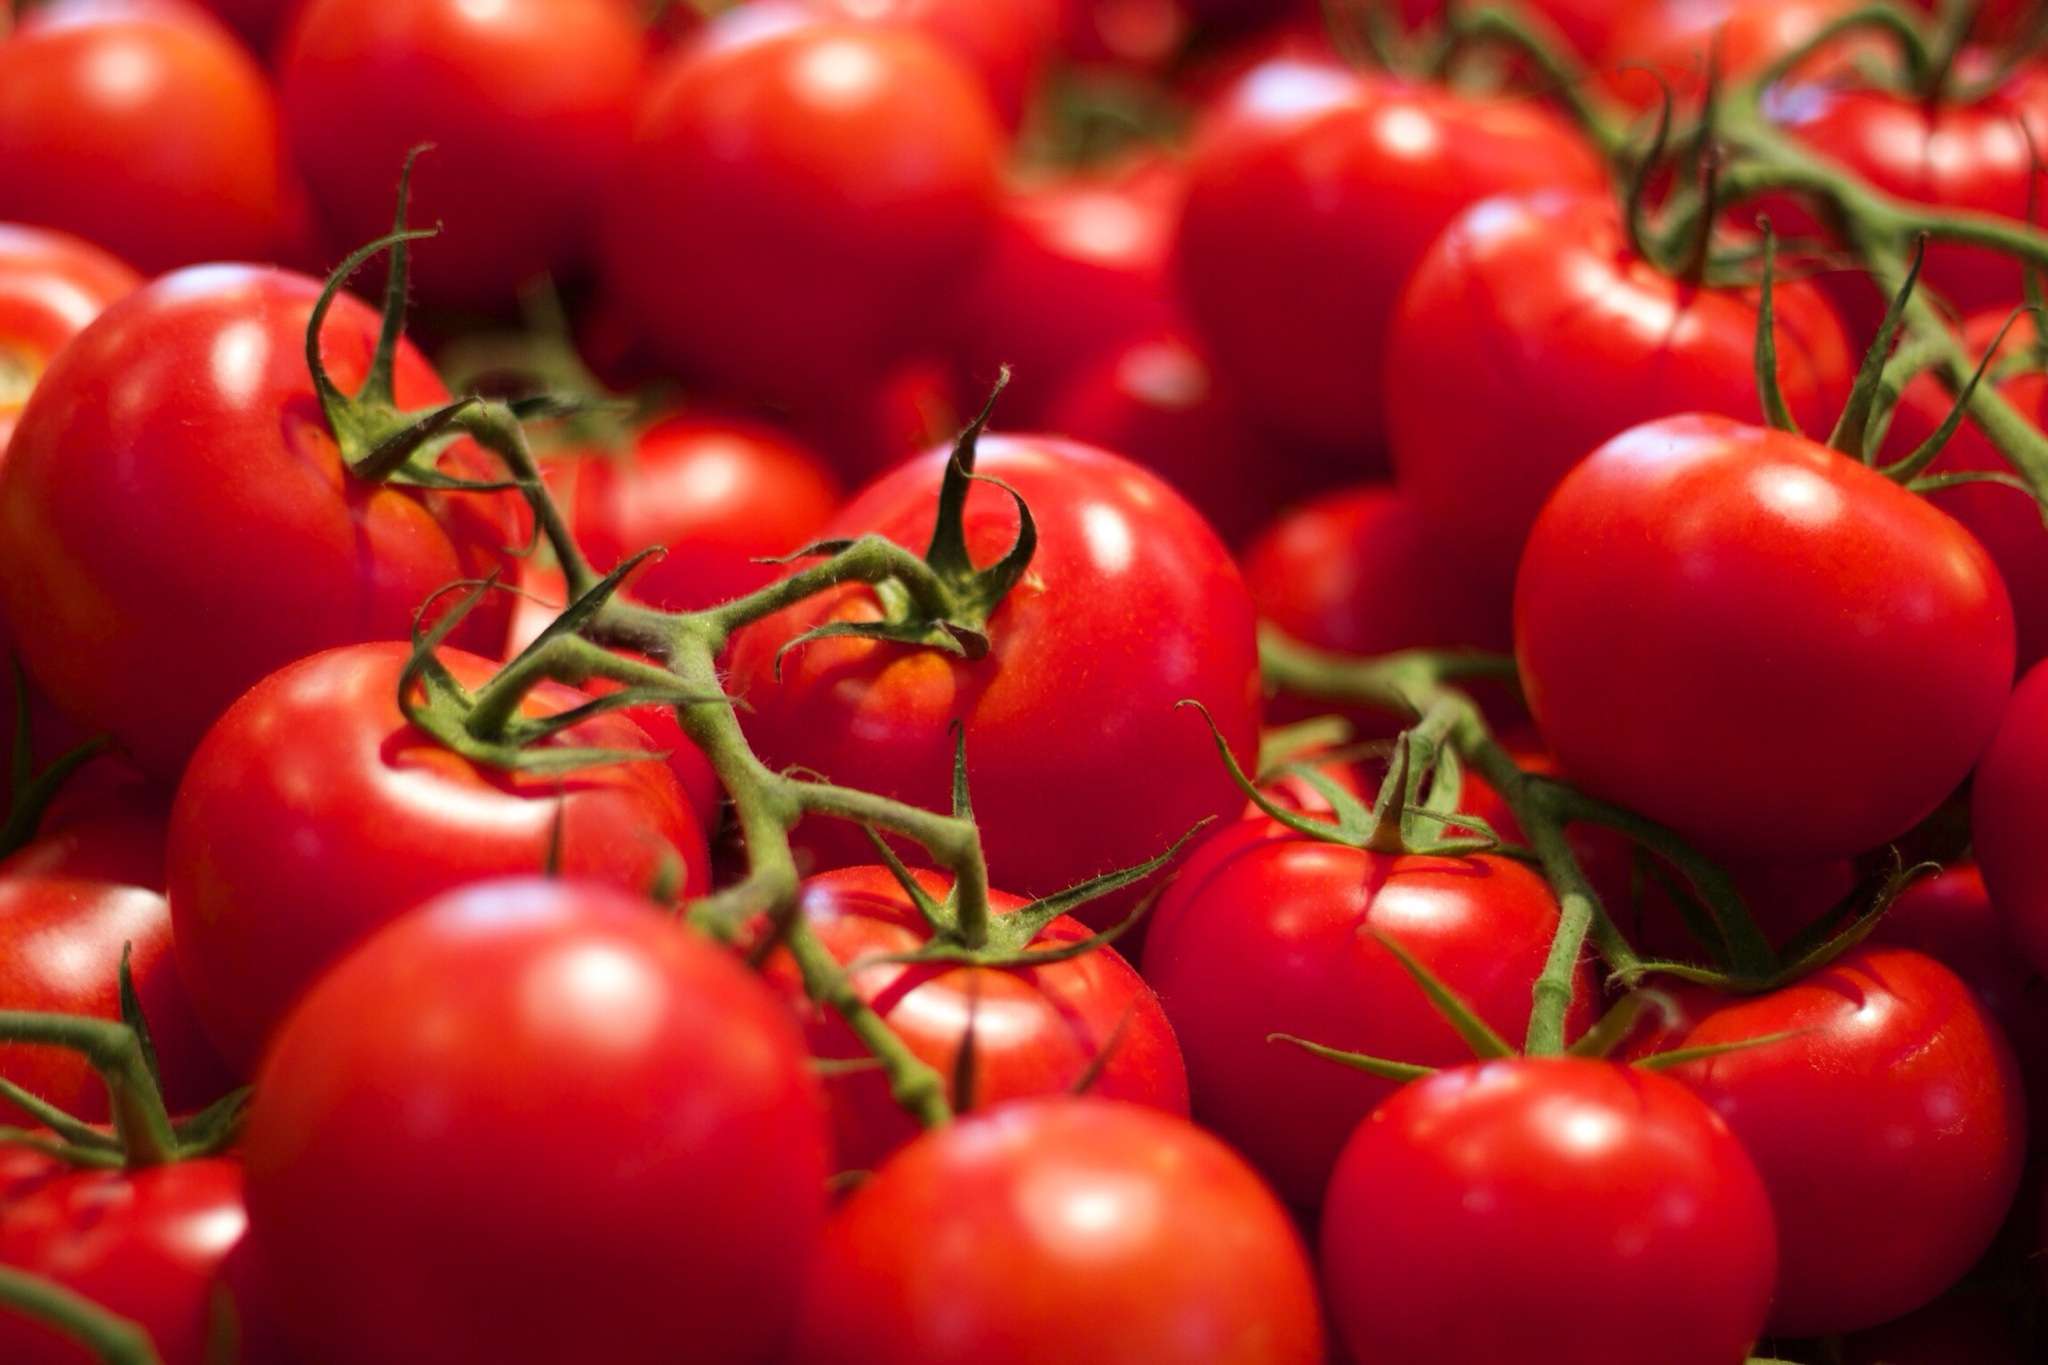 Recipe for Tomato Jam, a Sweet-Savory Preserves